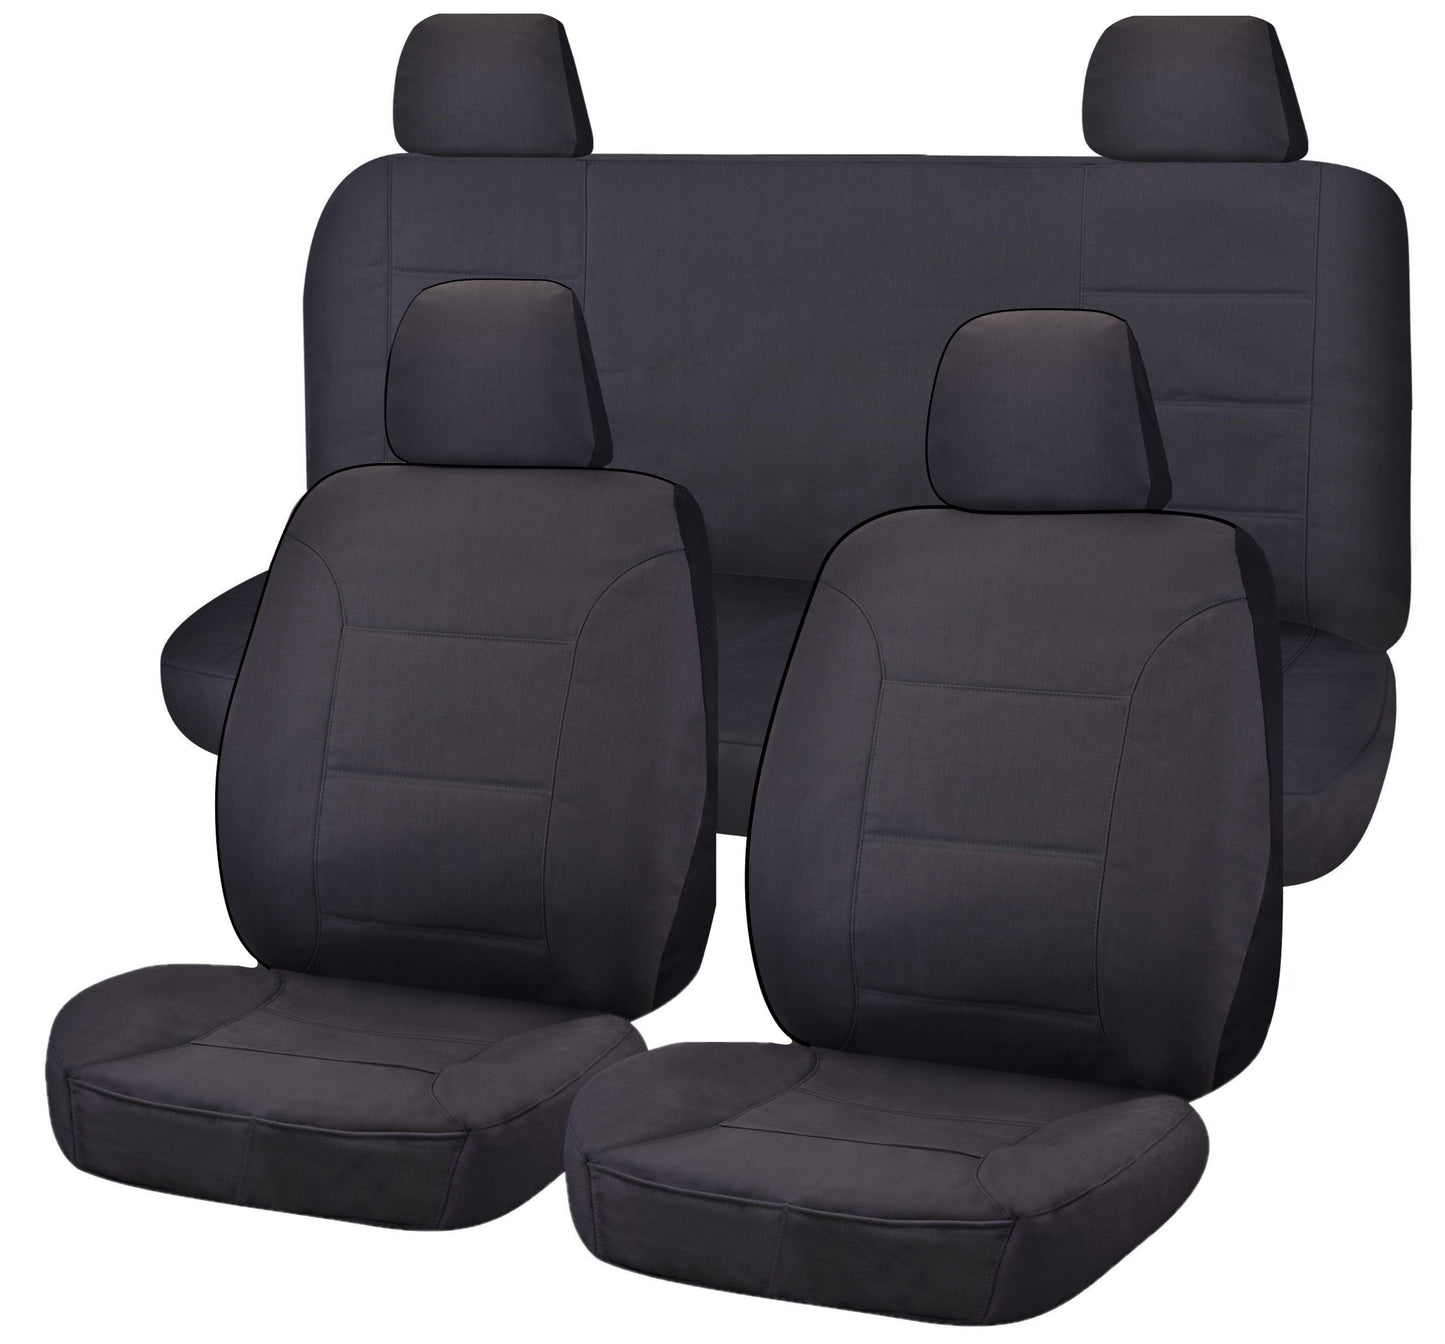 Seat Covers for NISSAN NAVARA D23 SERIES 3 NP300 11/2017 - 11/2020 DUAL CAB FR CHARCOAL ALL TERRAIN